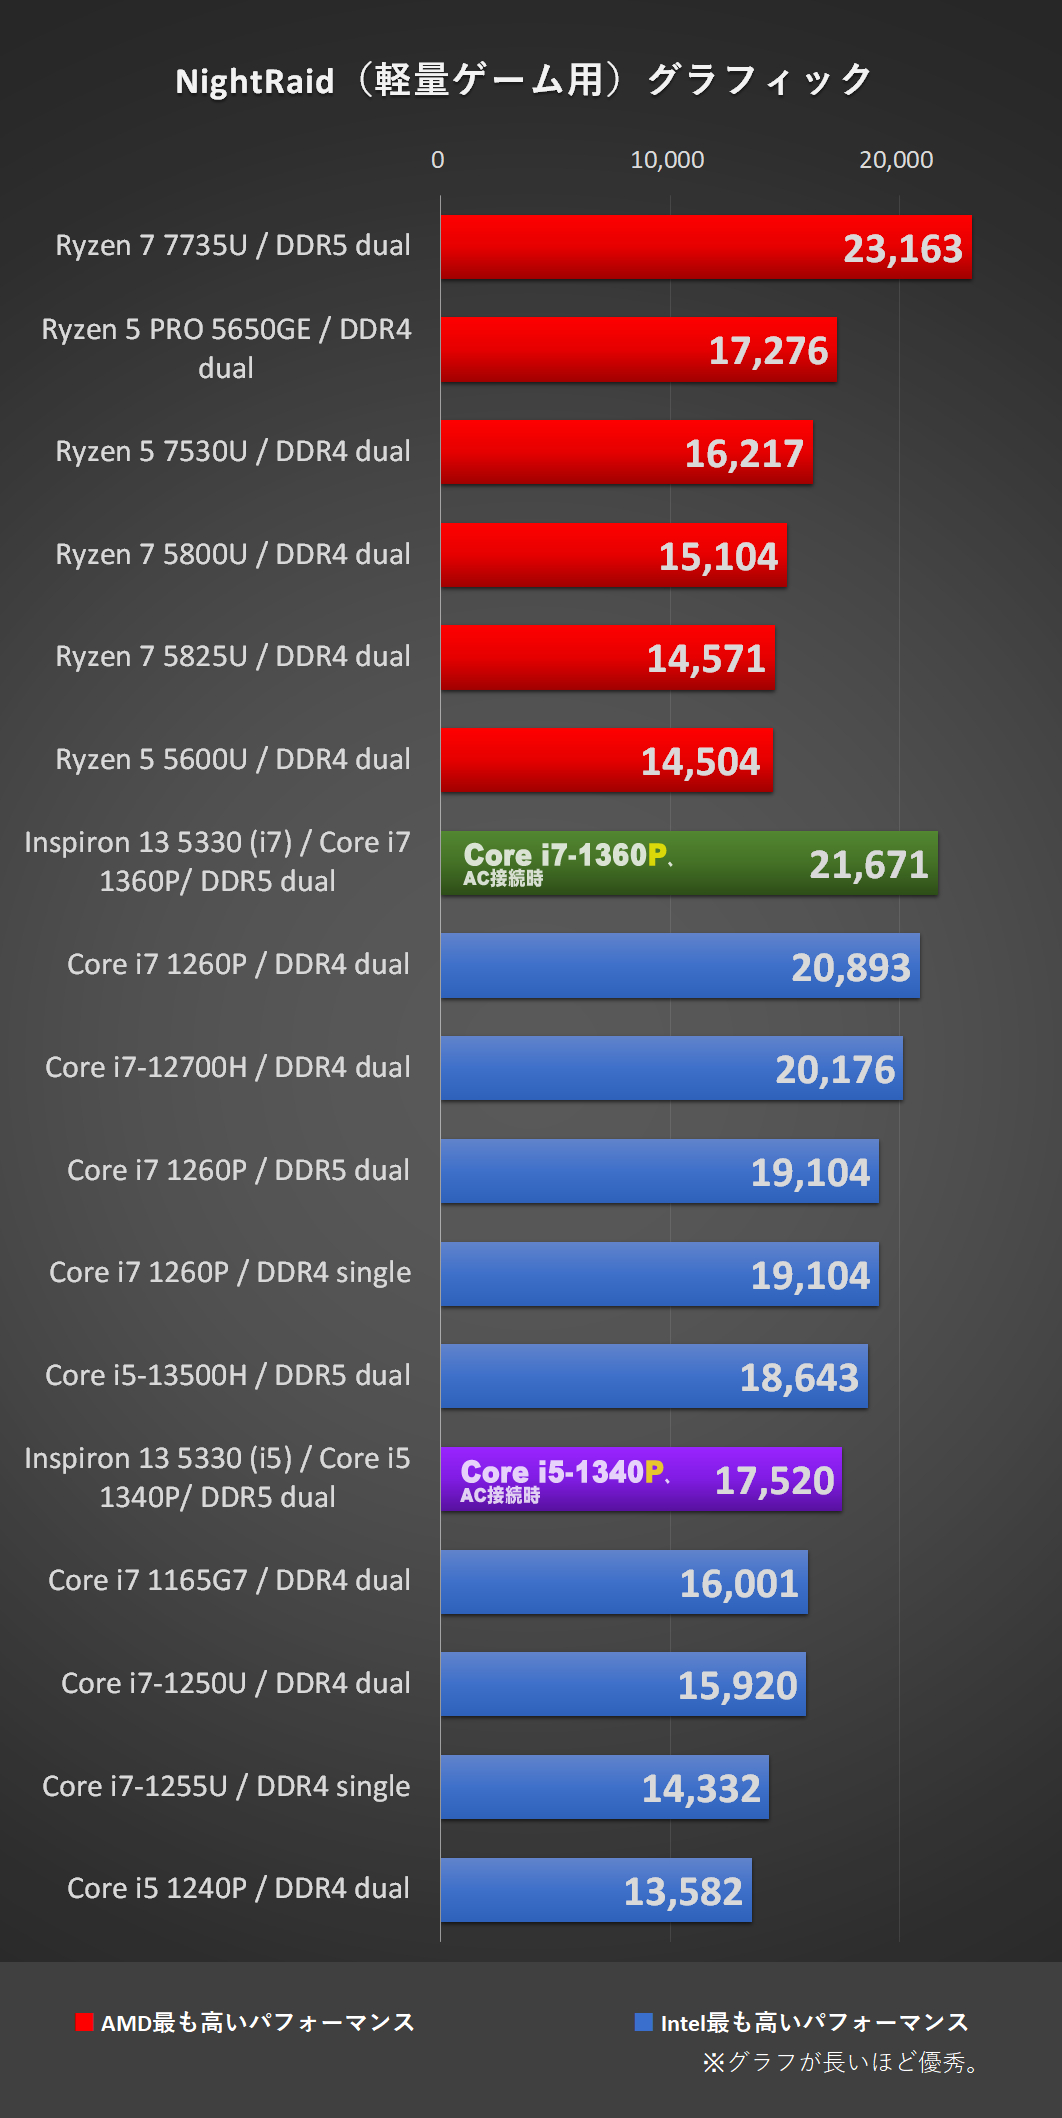 3DMark- NIGHT RAID：「Inspiron 13（5330）」Core i7-1360P、Core i5-1340P 、メモリ16GB時にて